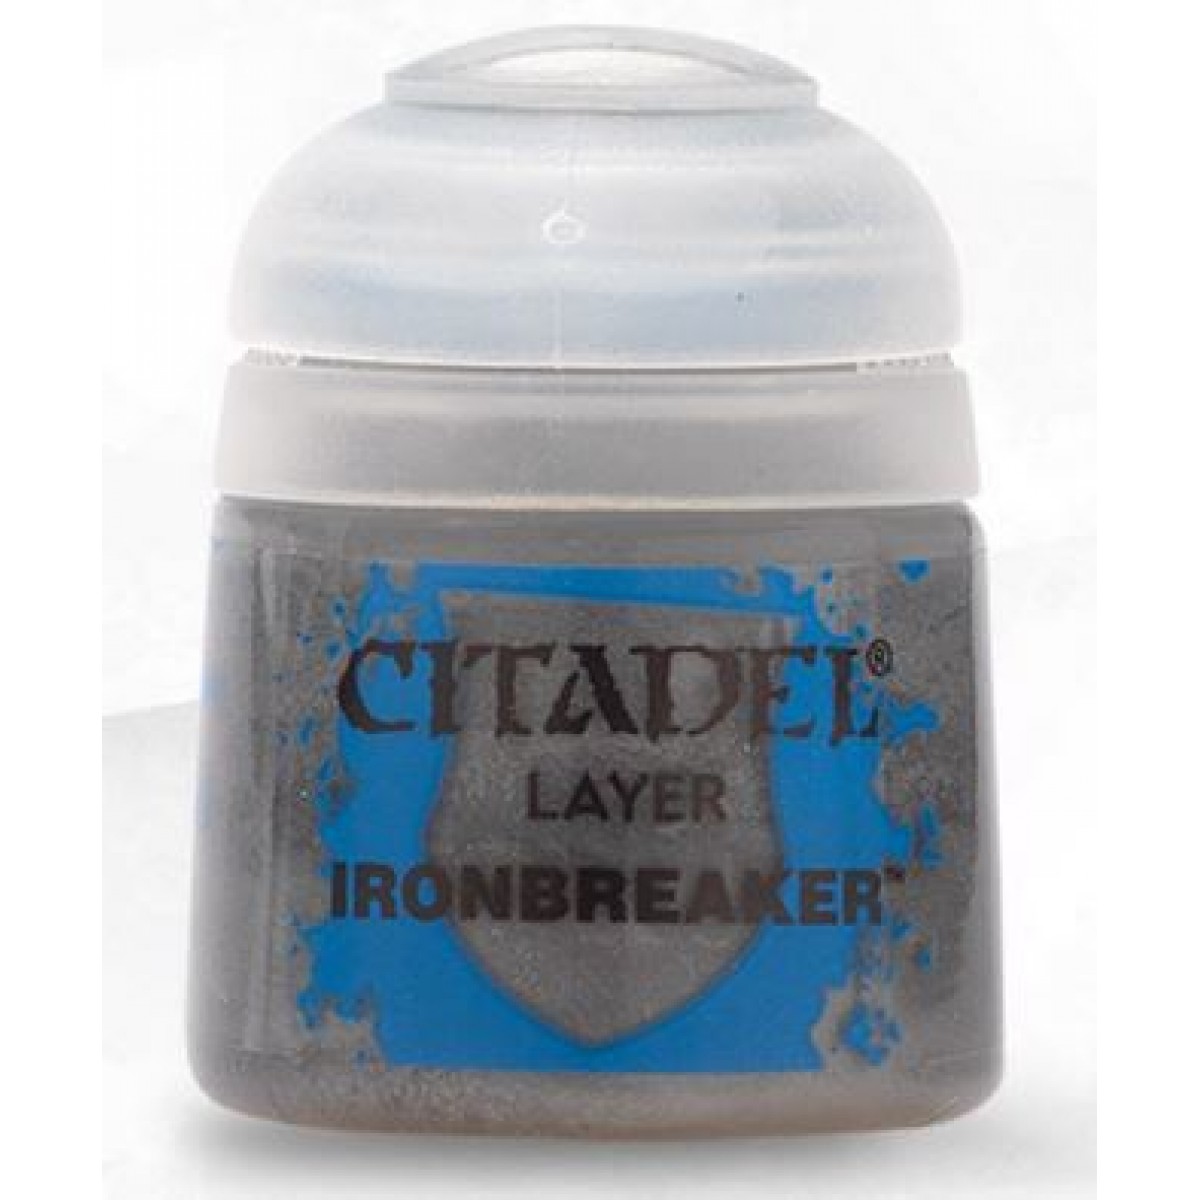 Citadel Paint: Layer - Ironbreaker